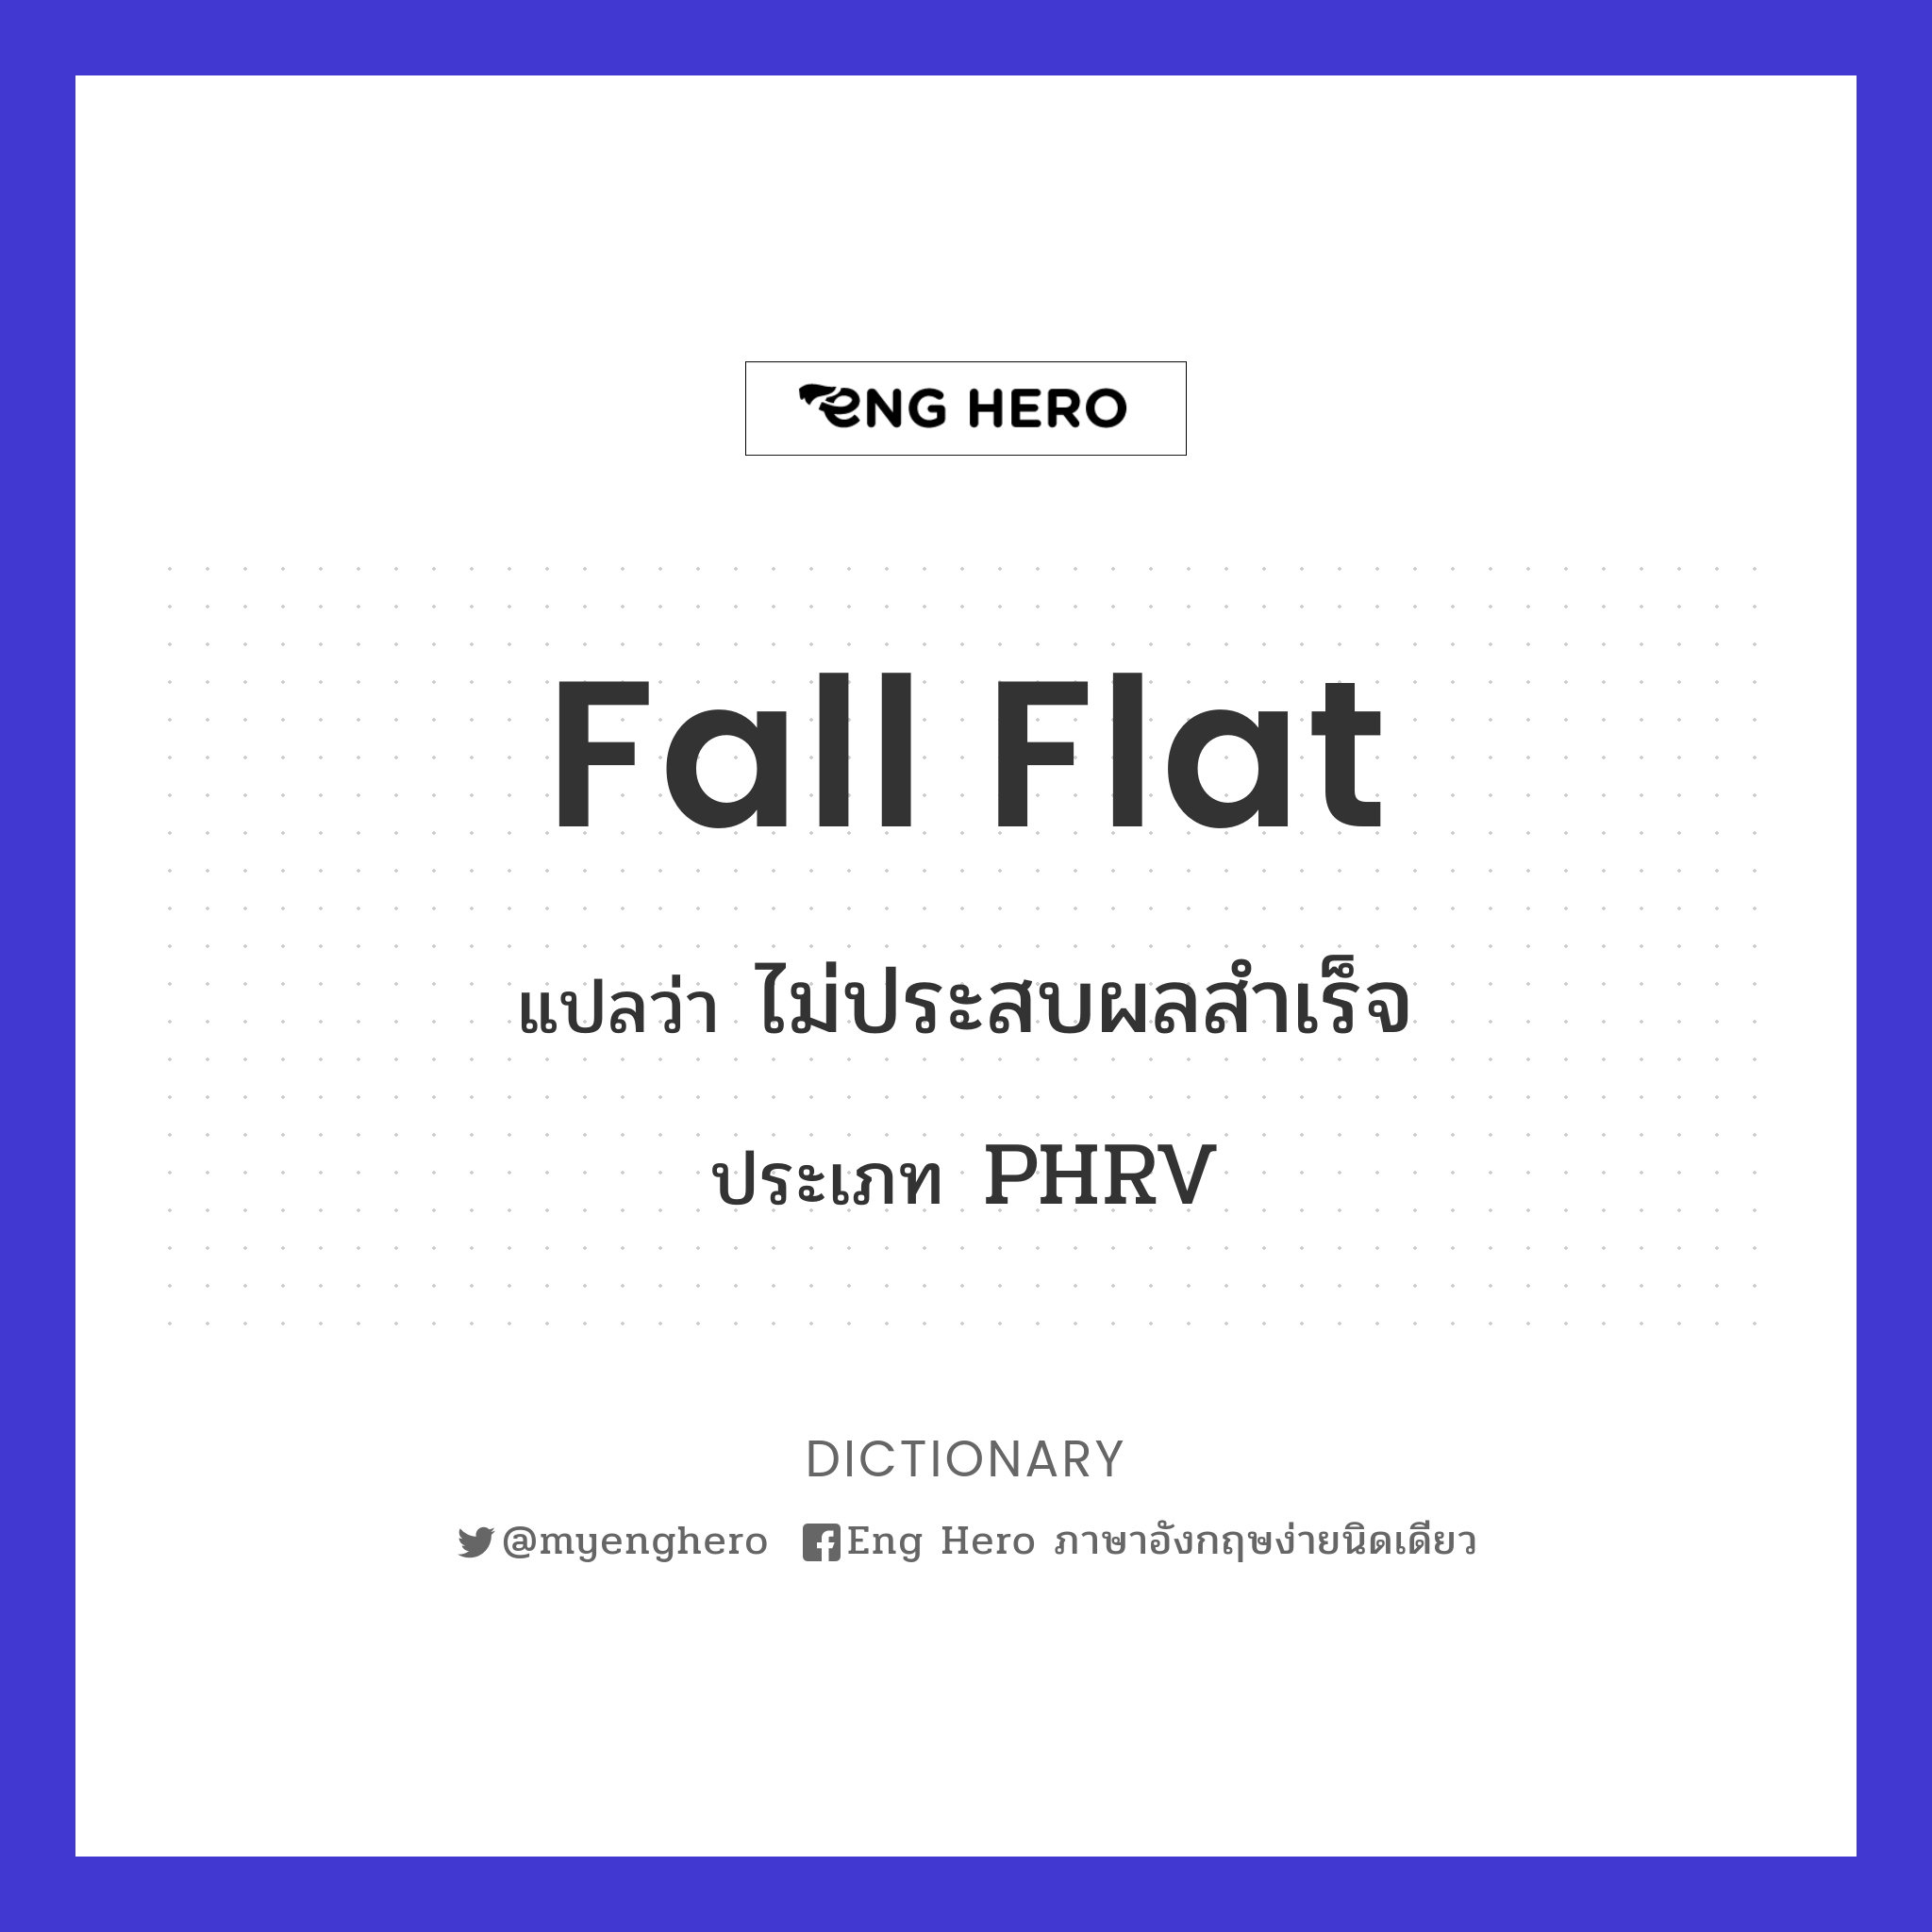 fall flat